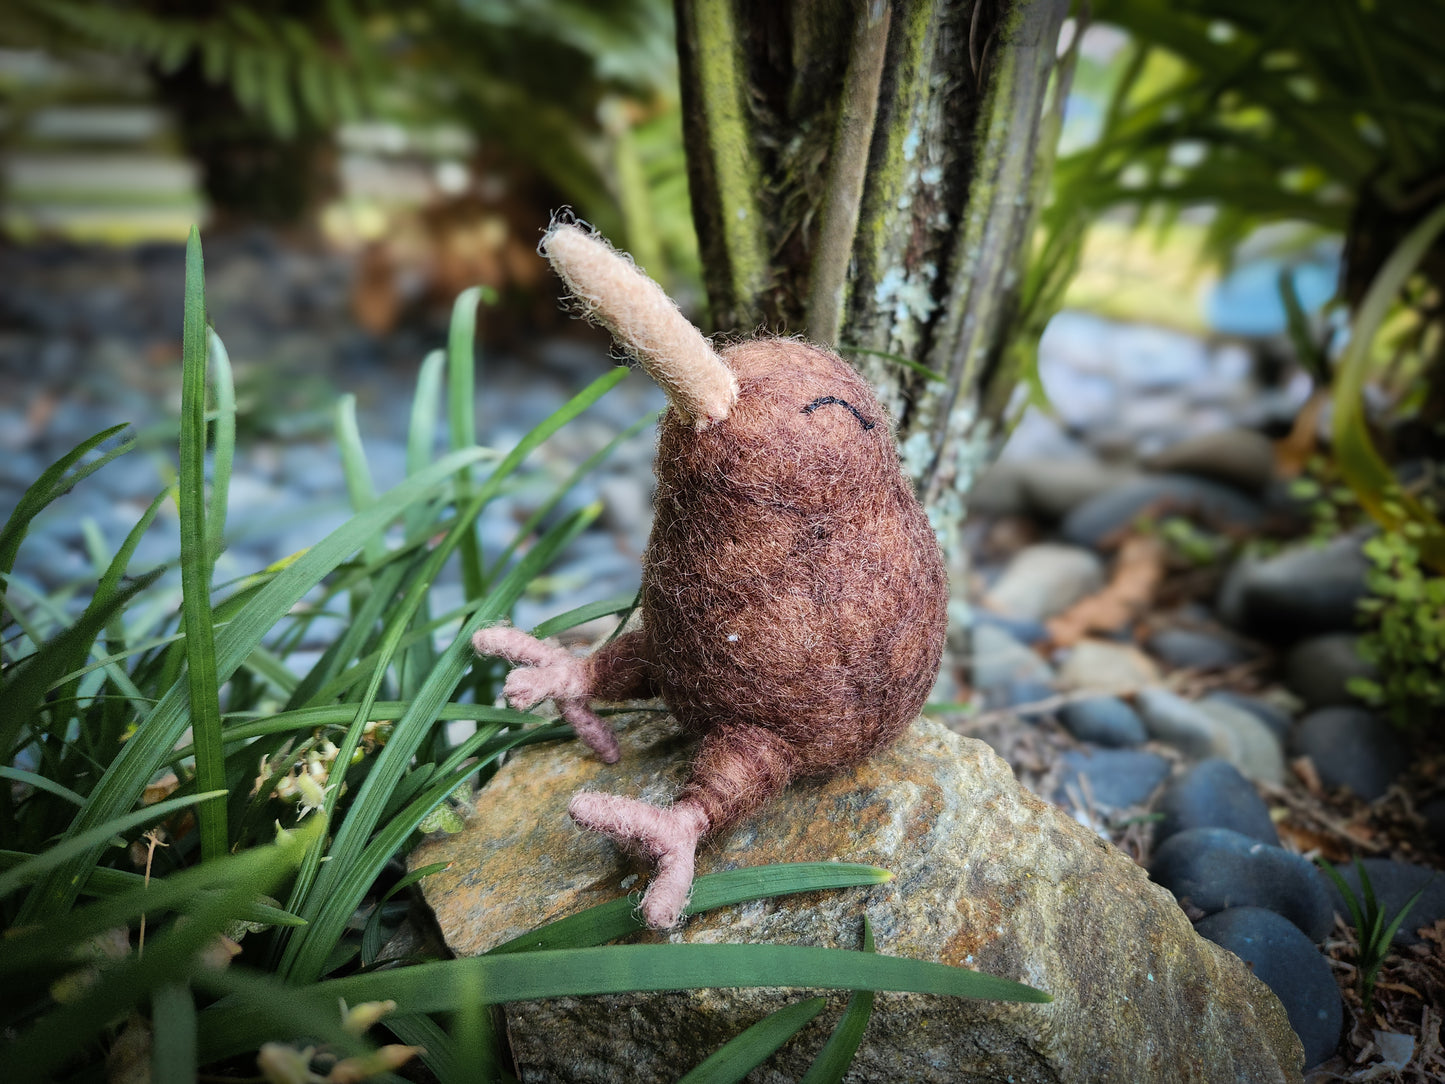 Felt Baby Kiwi Toy sitting on rock in bush